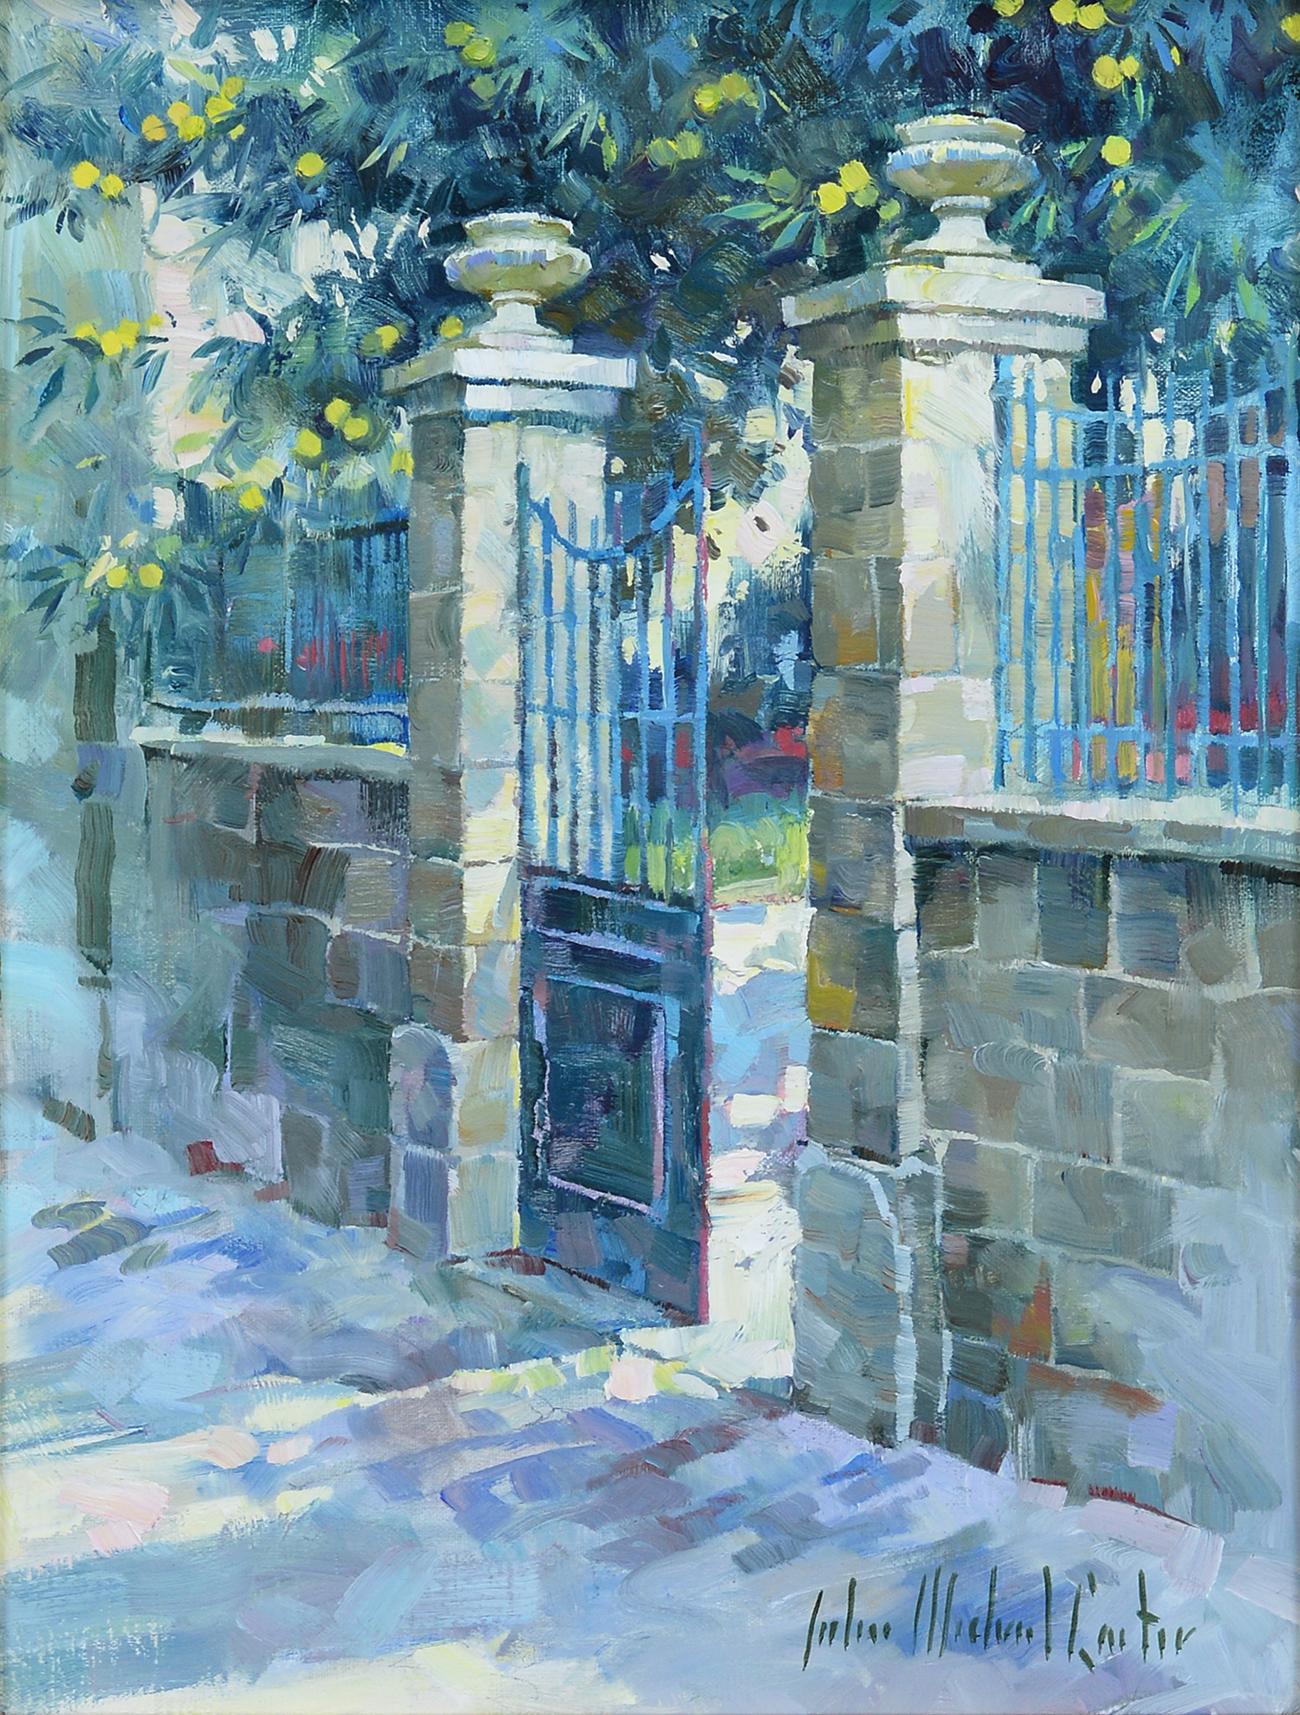 Garden Gate - Painting by John Michael Carter